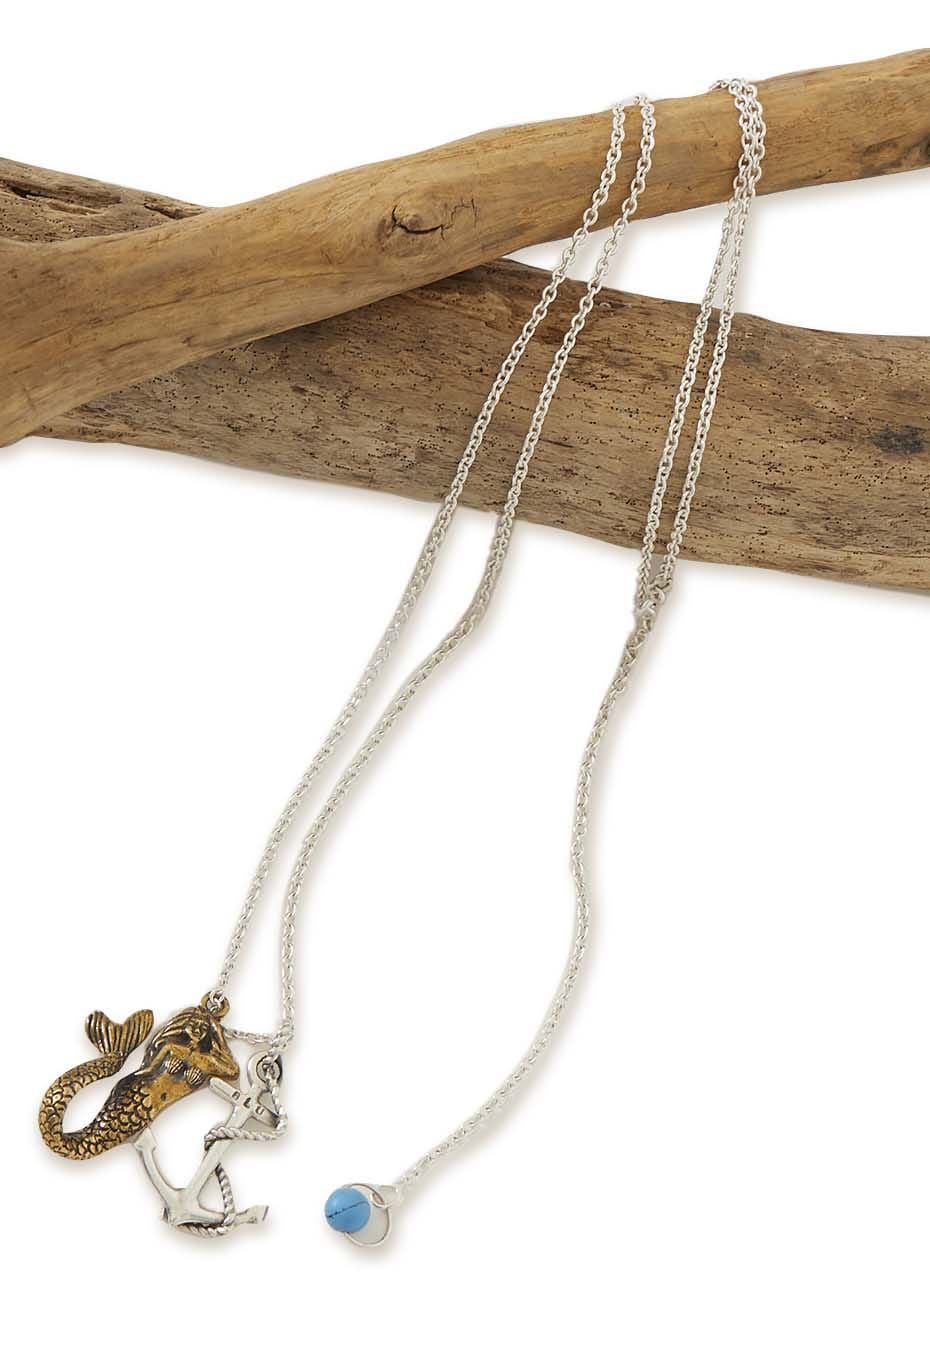 Mermaid & Anchor Necklace